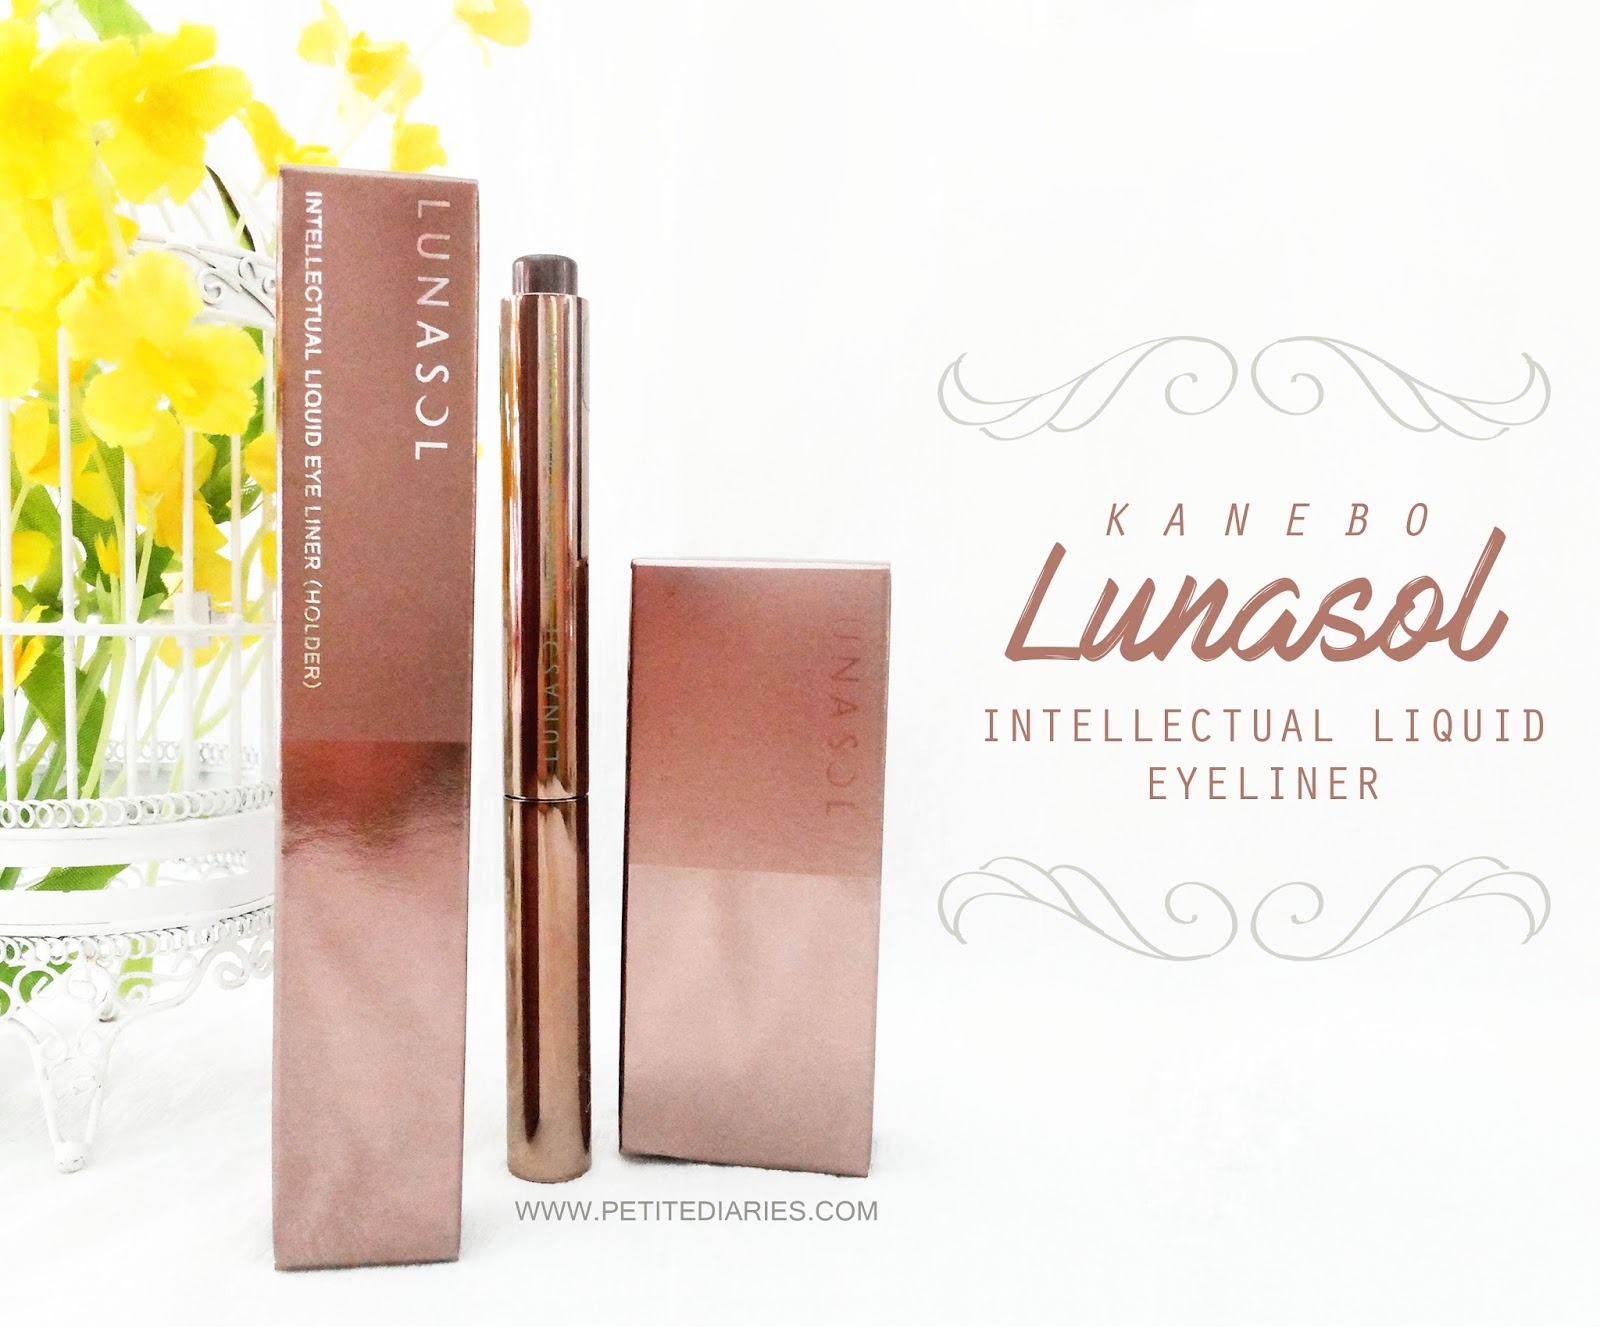 kanebo lunasol intellectual liquid eyeliner review